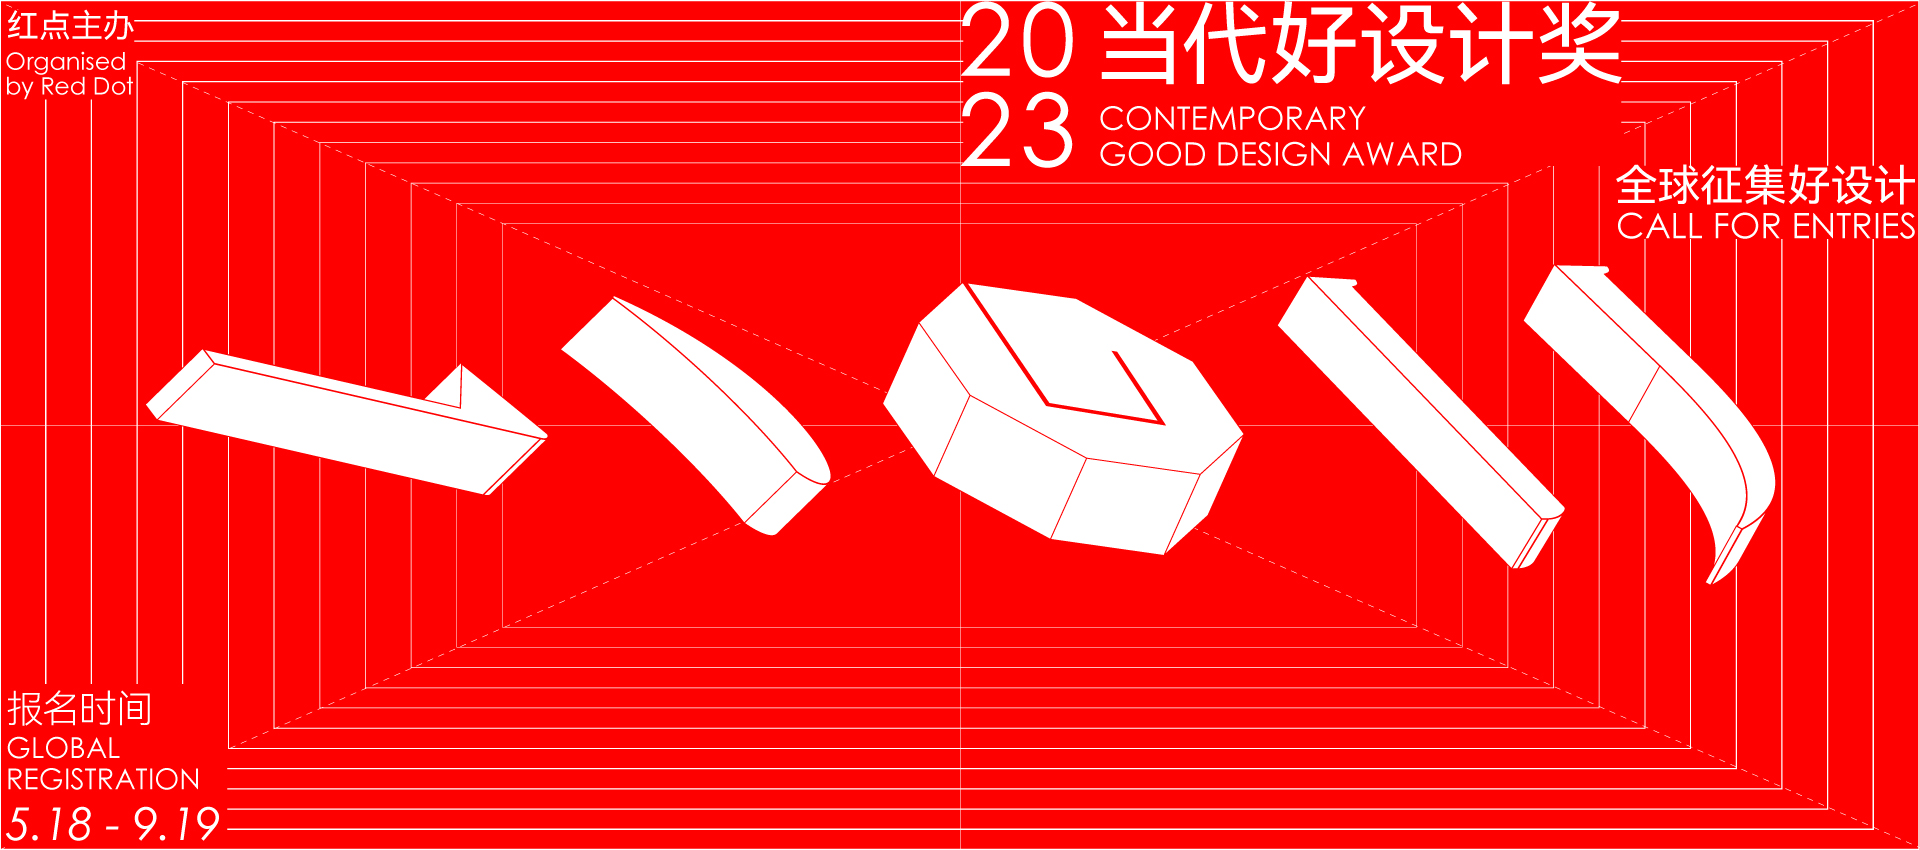 2023 Contemporary Good Design Award ｜ Call For Entries!